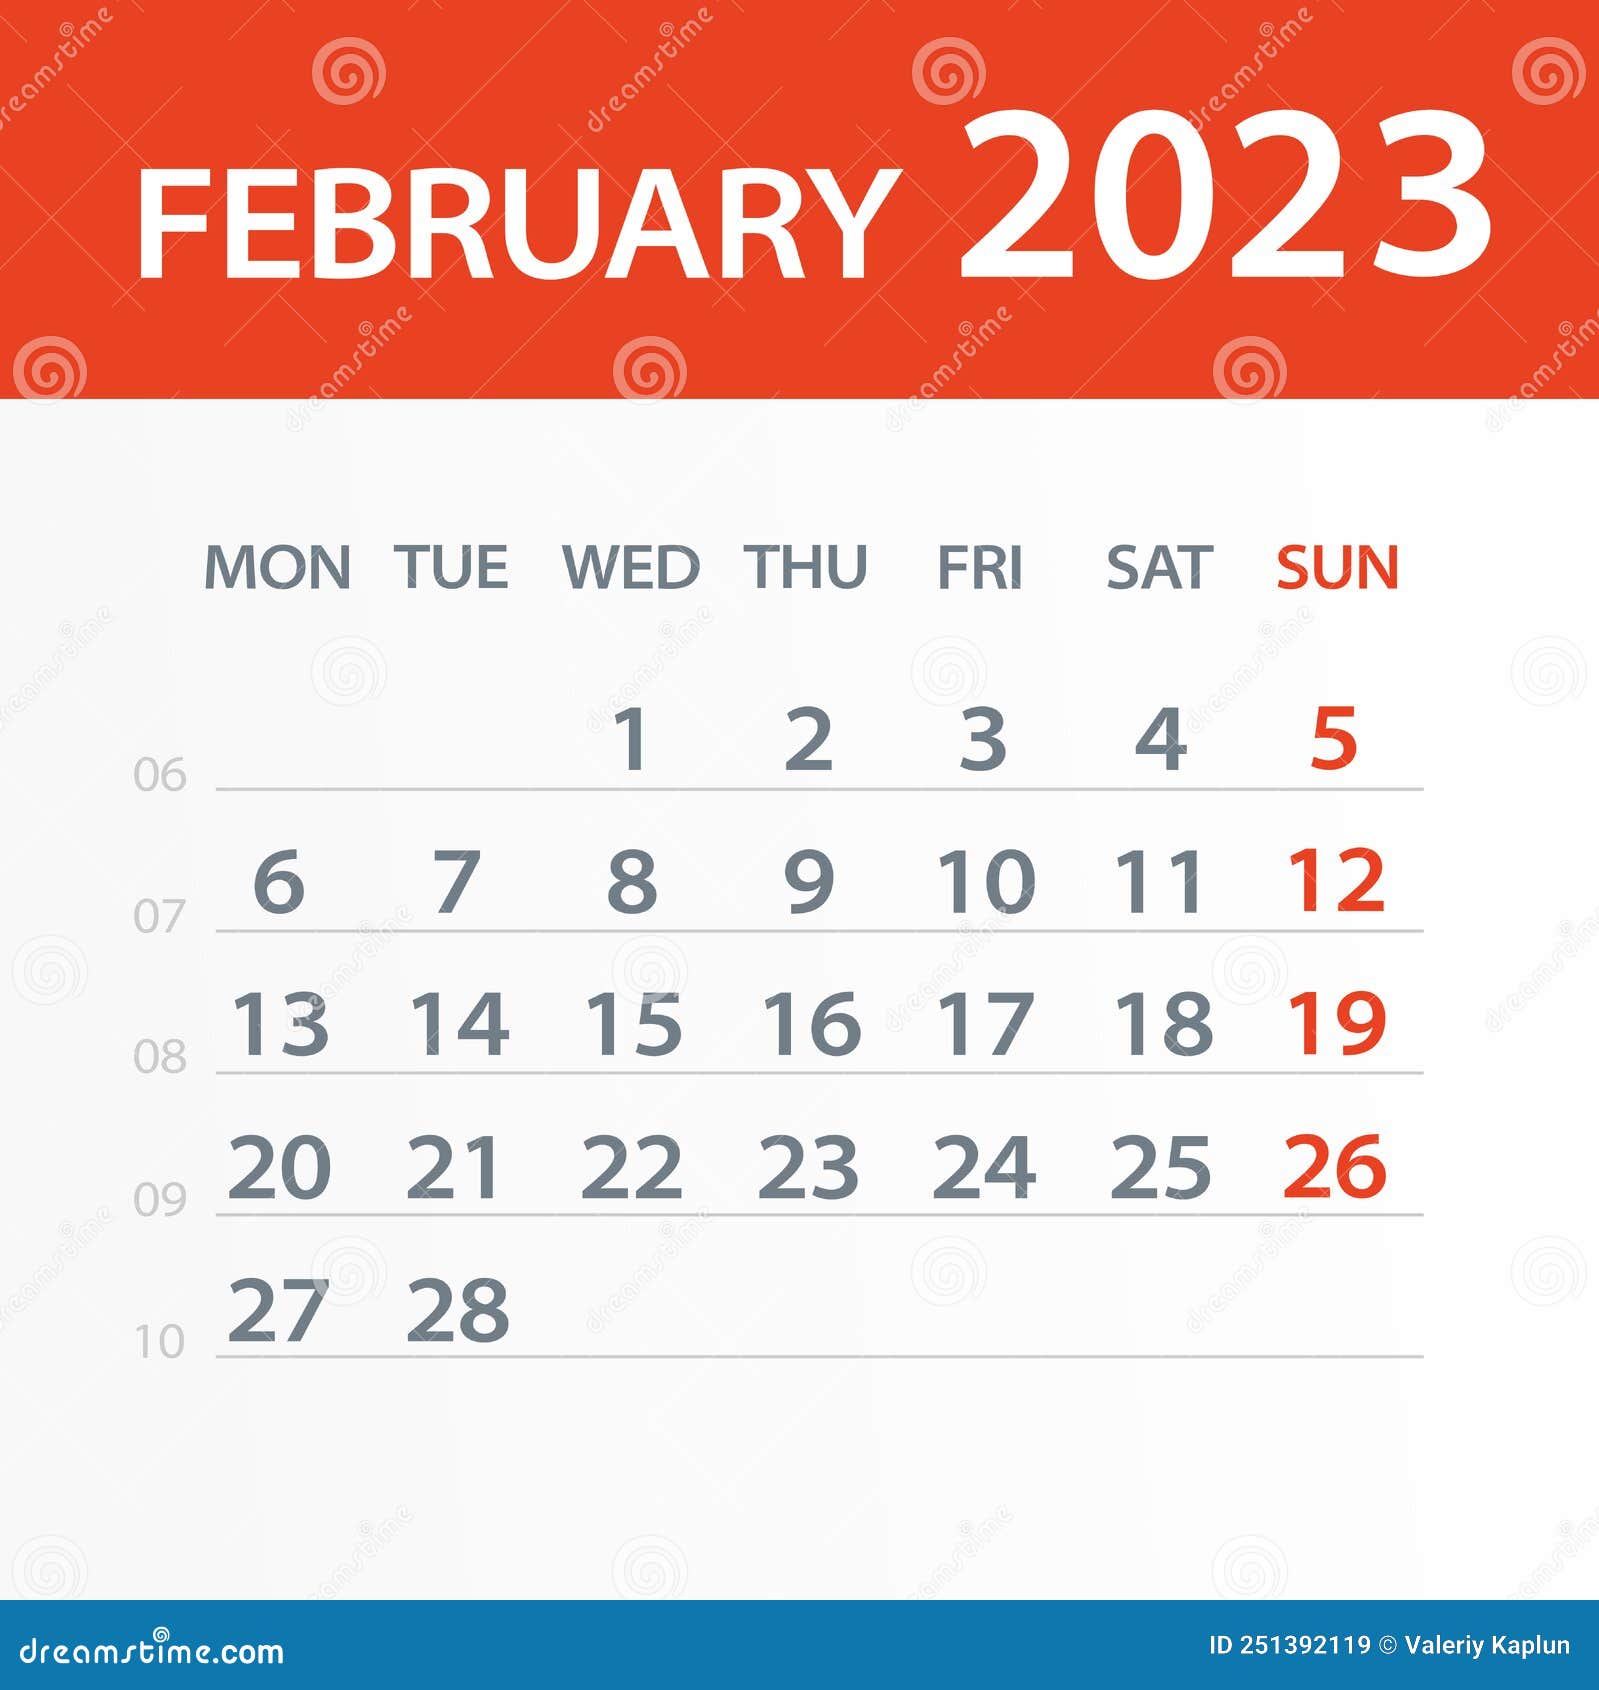 February 2023 Calendar Leaf Vector Illustration. Week Starts on